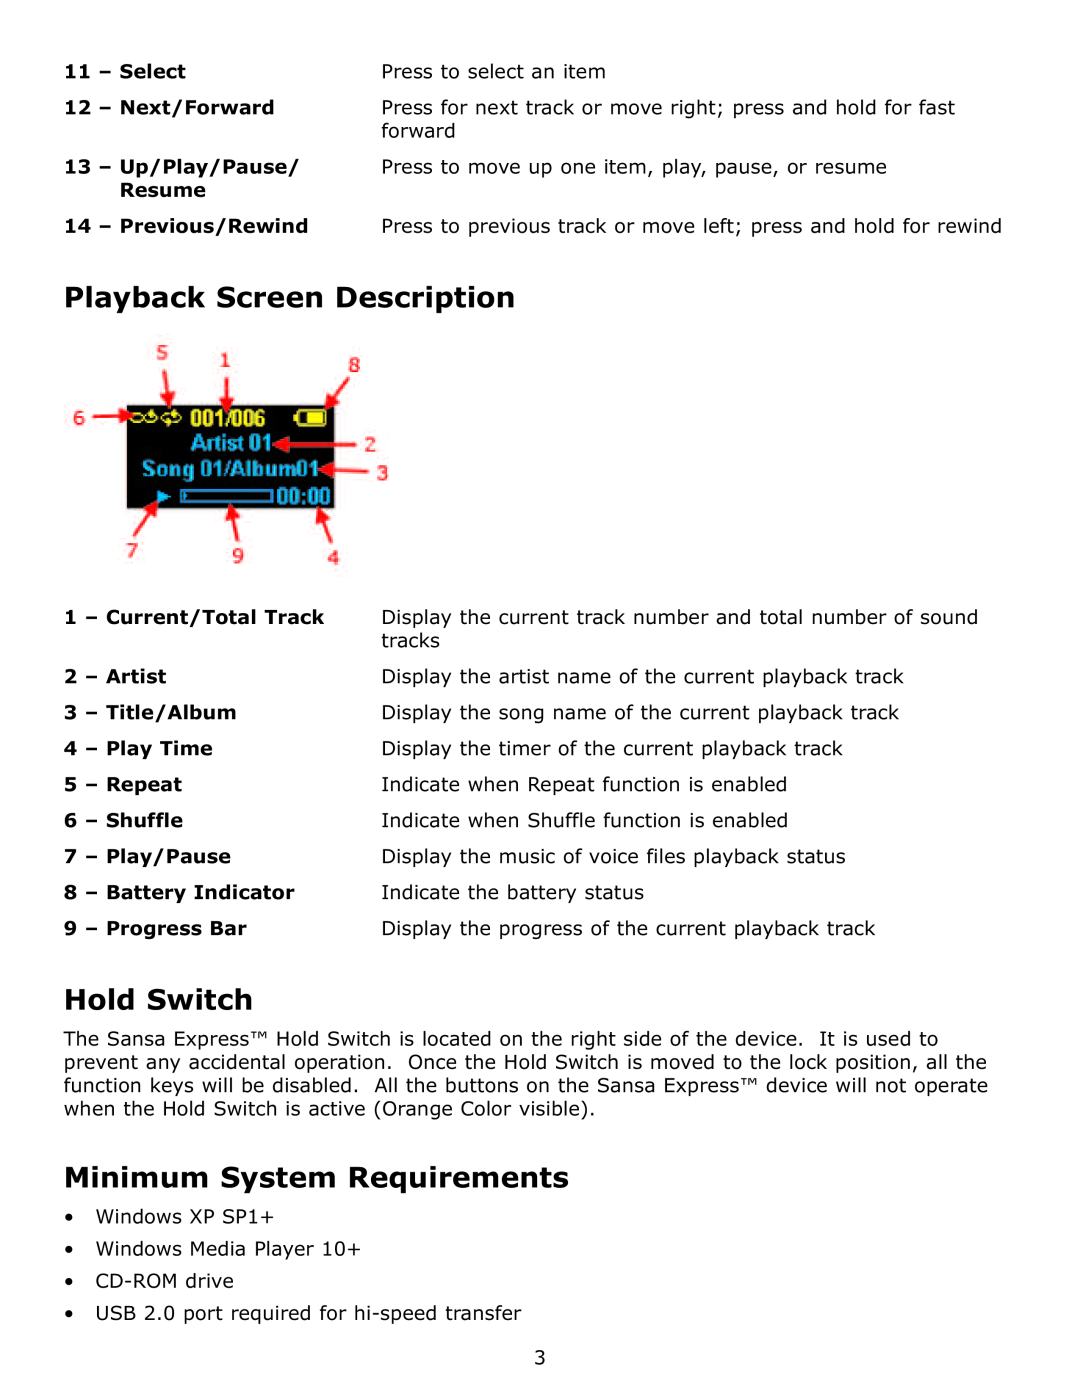 SanDisk c200 Playback Screen Description, Hold Switch, Minimum System Requirements, Previous/Rewind, Progress Bar 